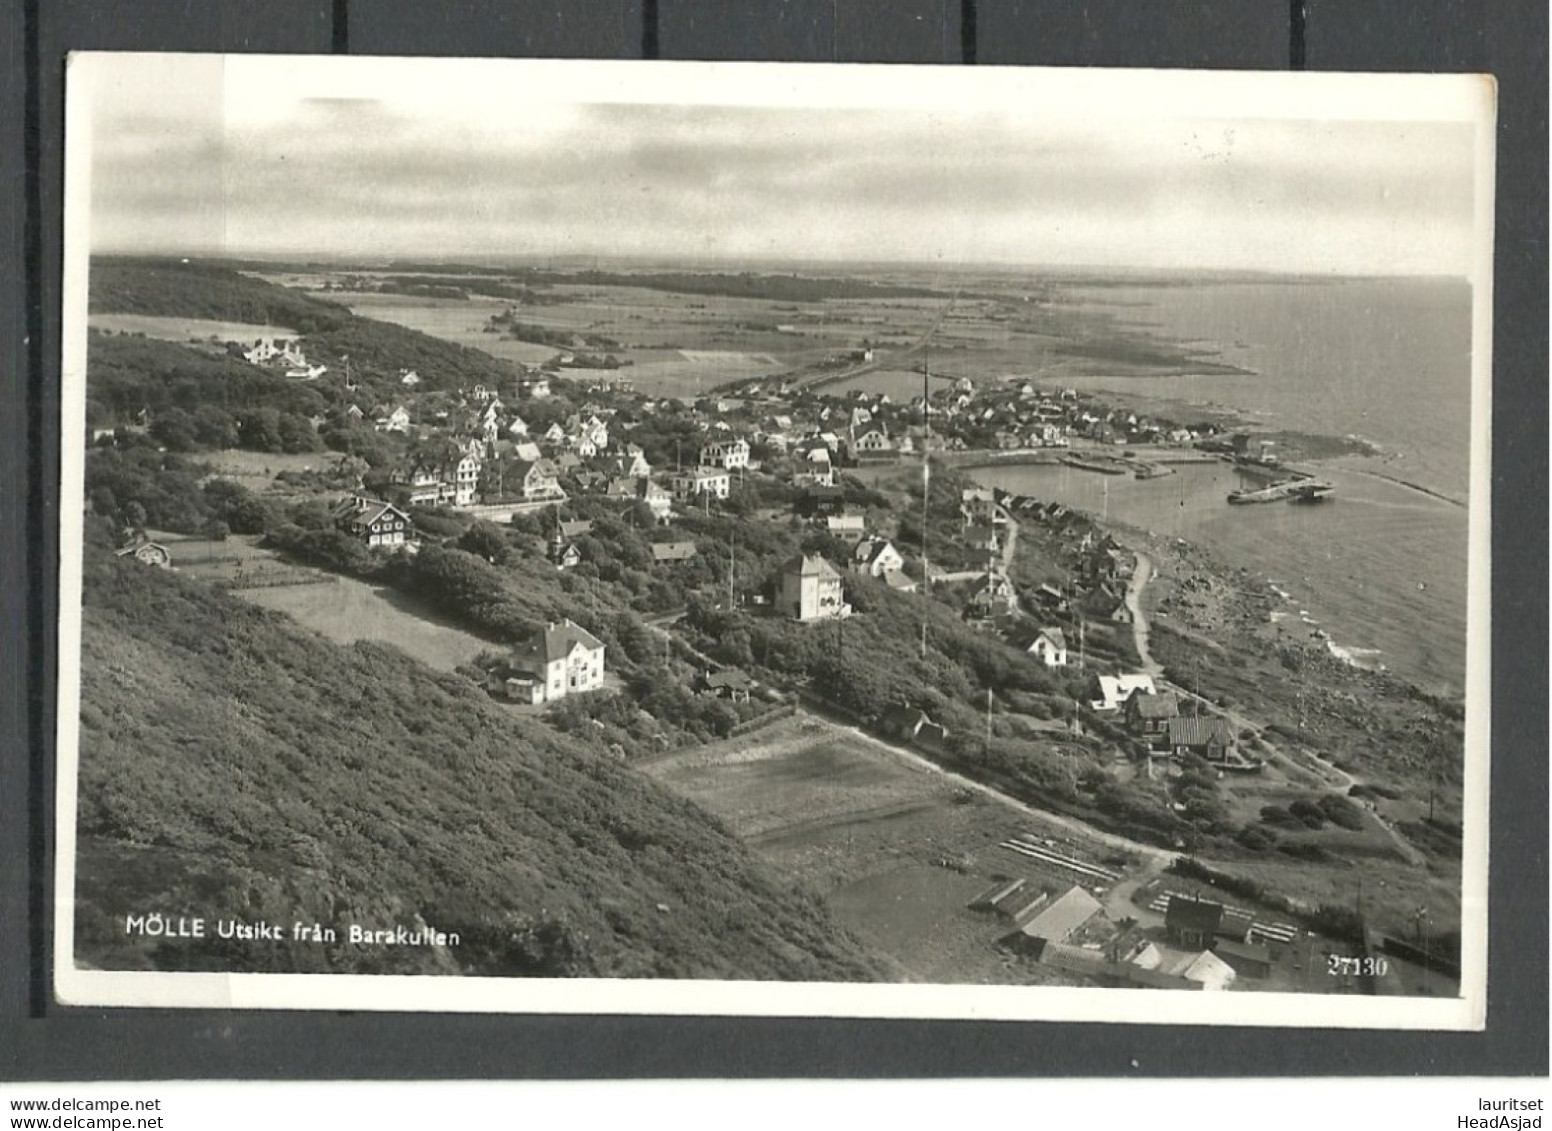 SWEDEN - MÖLLE - View From Barakullen - Photo Post Card, Unused - Suède